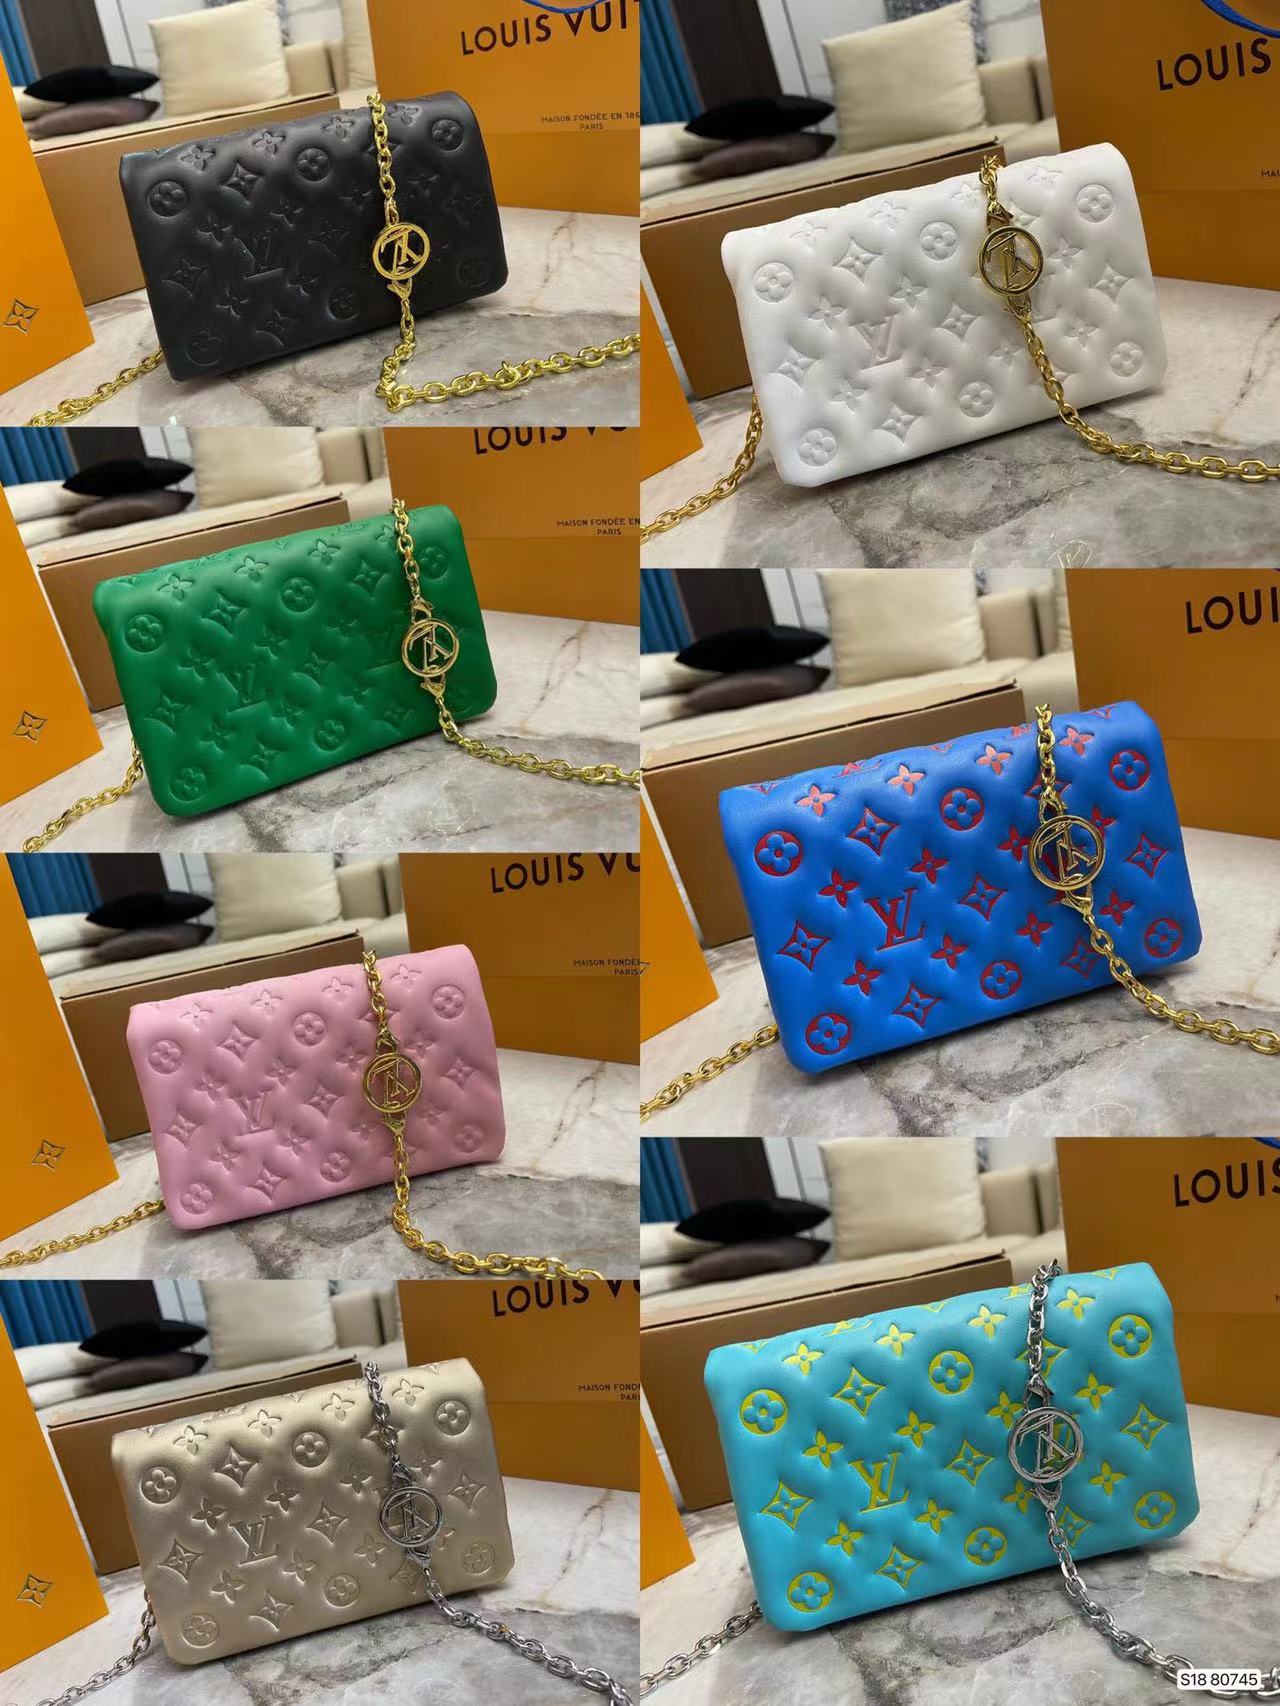 Where can I buy in bulk replica luxury purses wholesale in the USA? - Quora